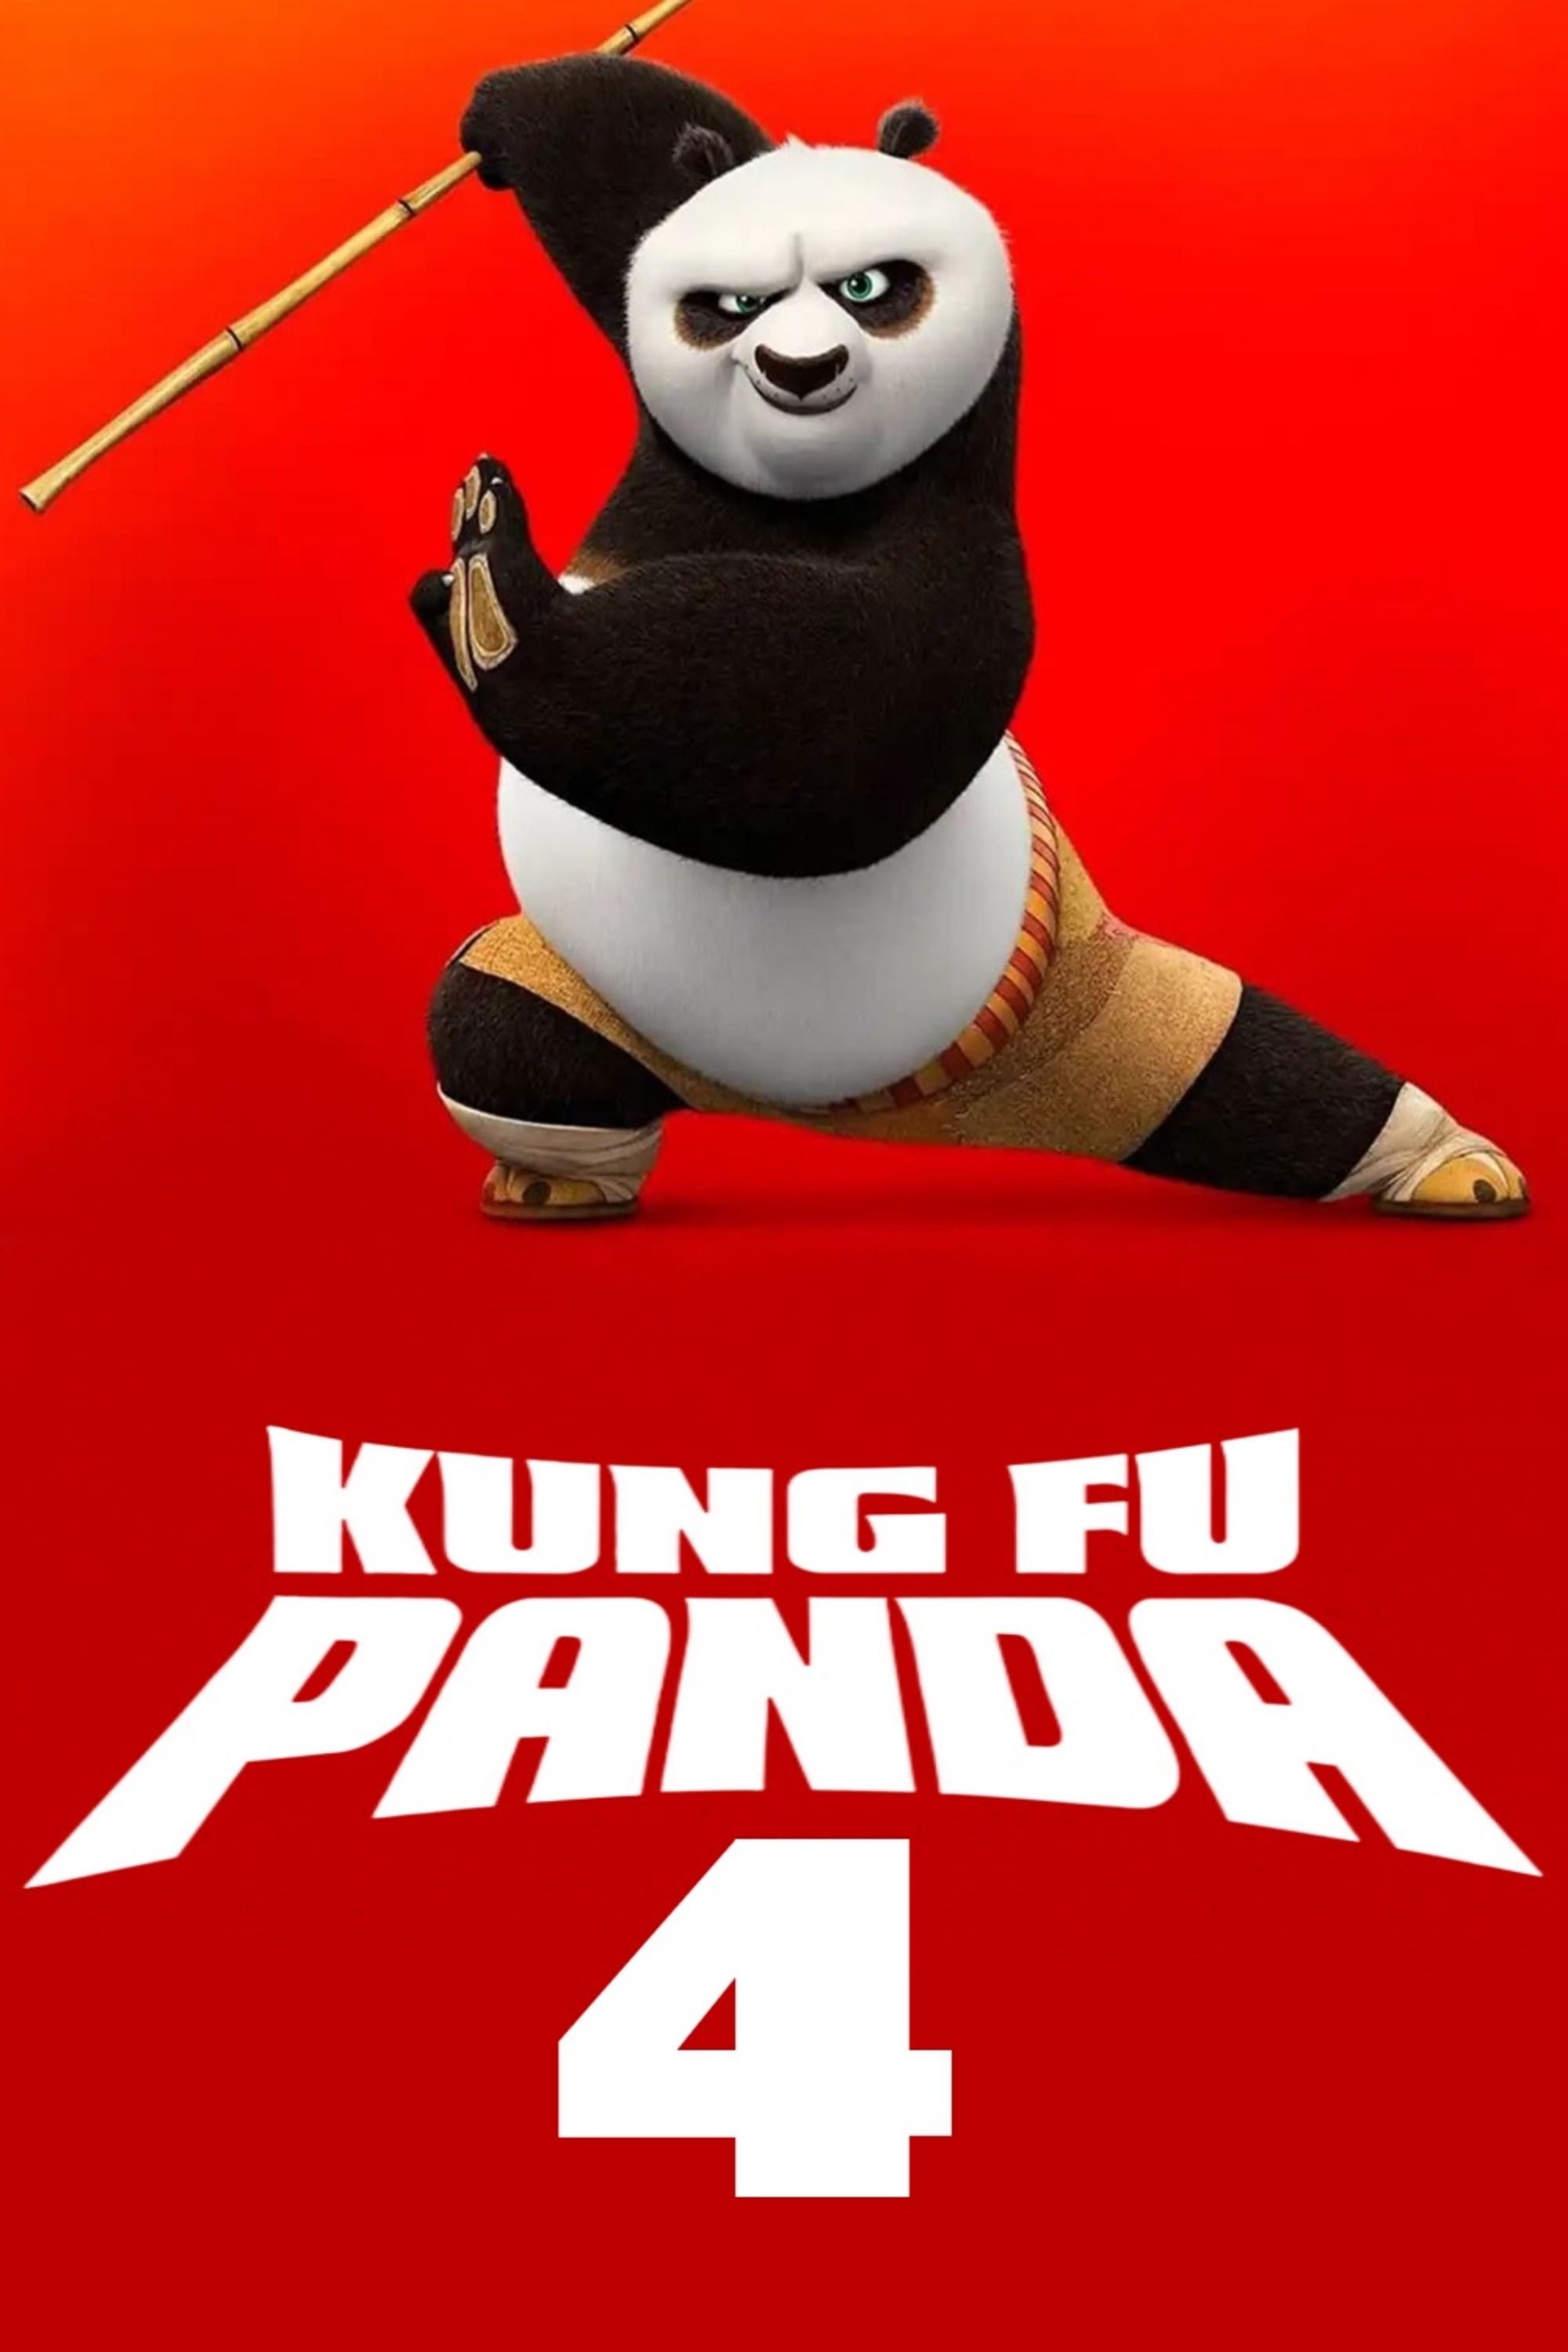 Kung Fu Panda 4 Gets Digital Release Date, Includes Bonus Short Film